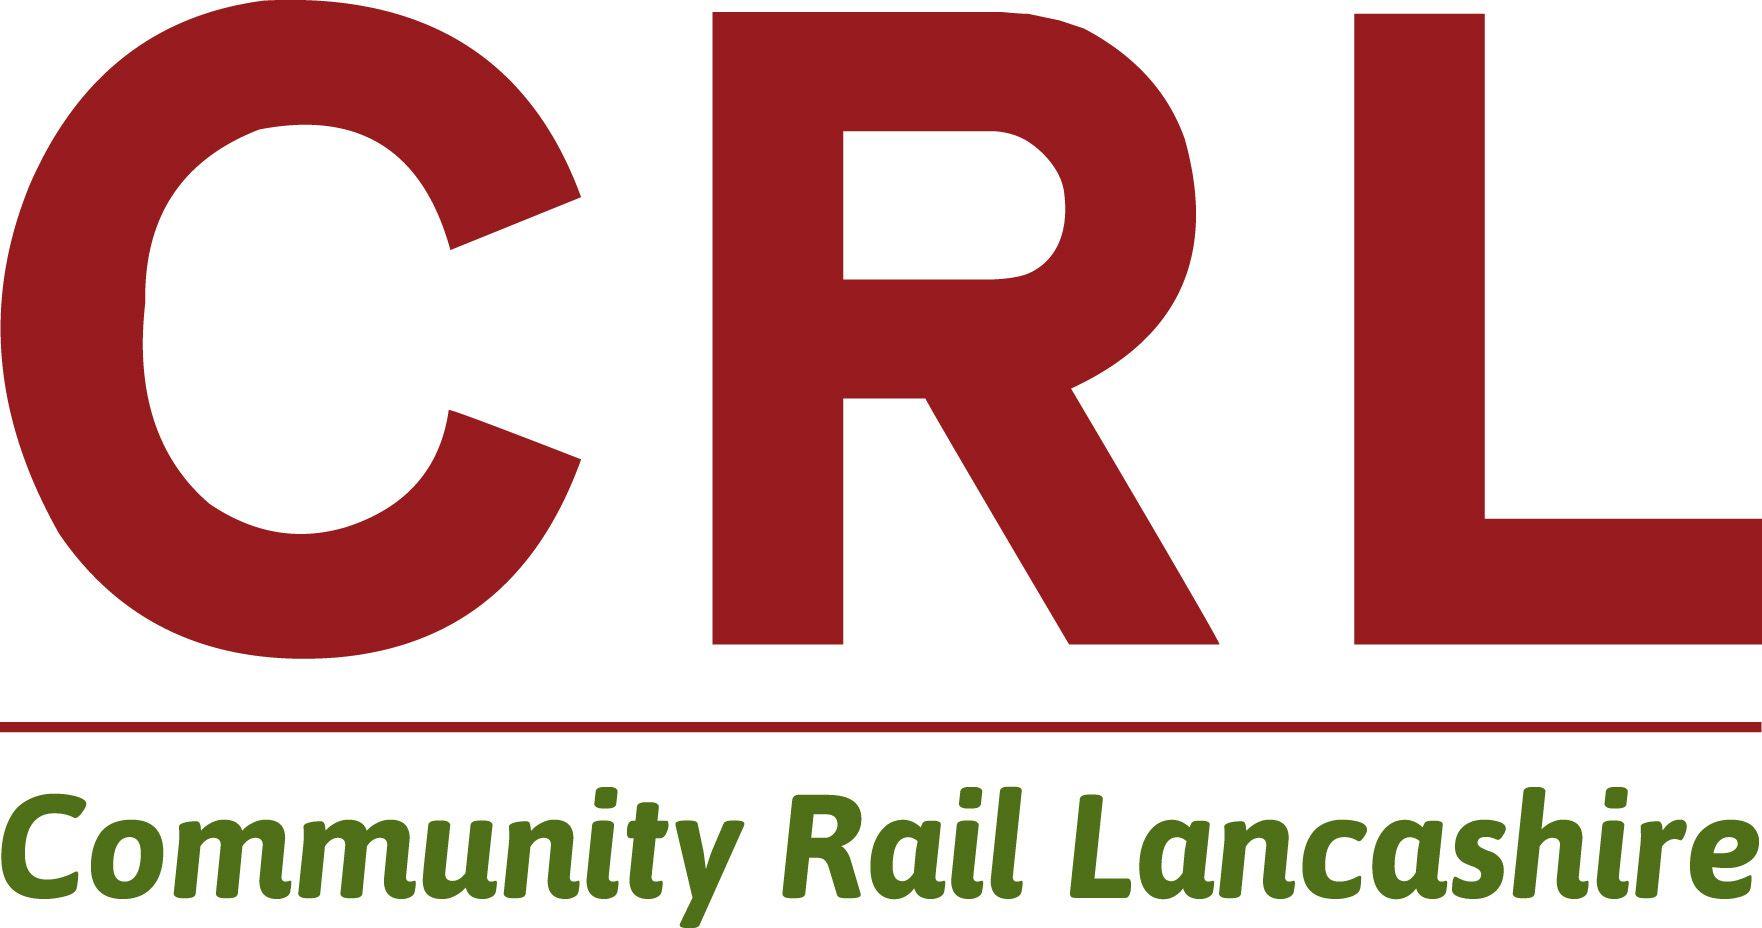 CRL Logo - CRL Wins 2015 Abellio Challenge. Community Rail Lancashire